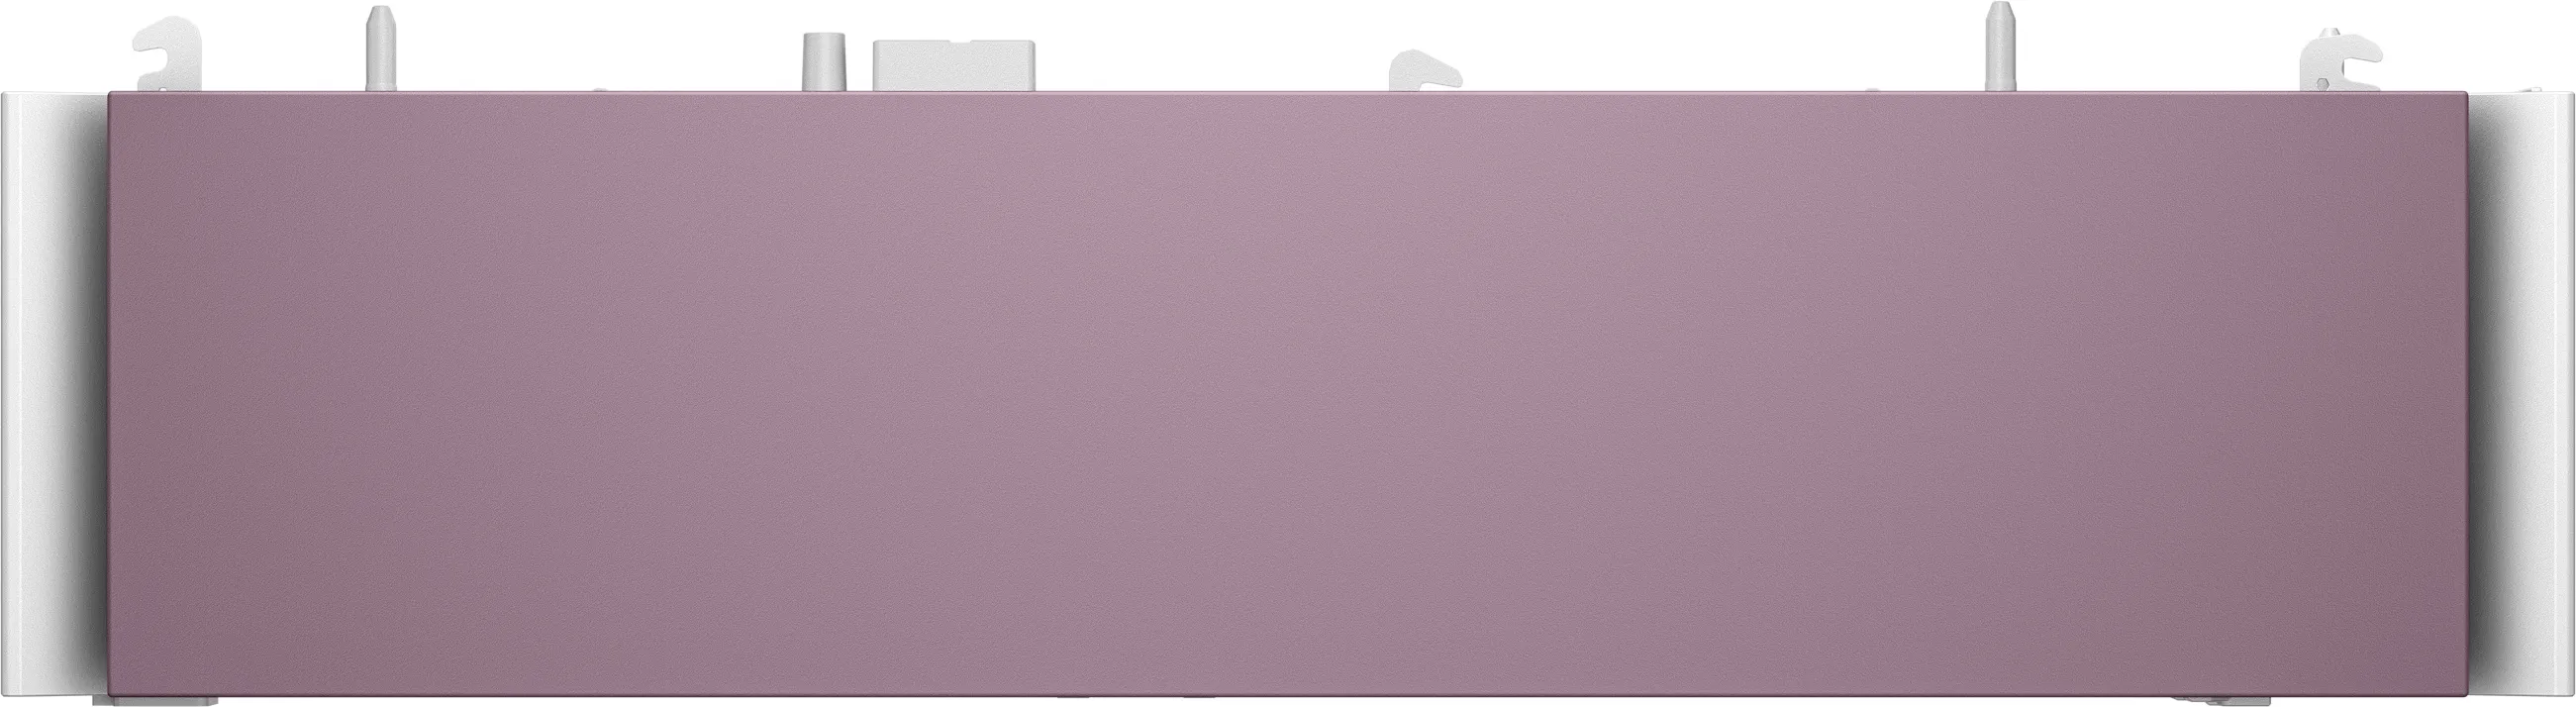 Vente HP Clr LJ Purple 550 Sheet Paper Tray HP au meilleur prix - visuel 4